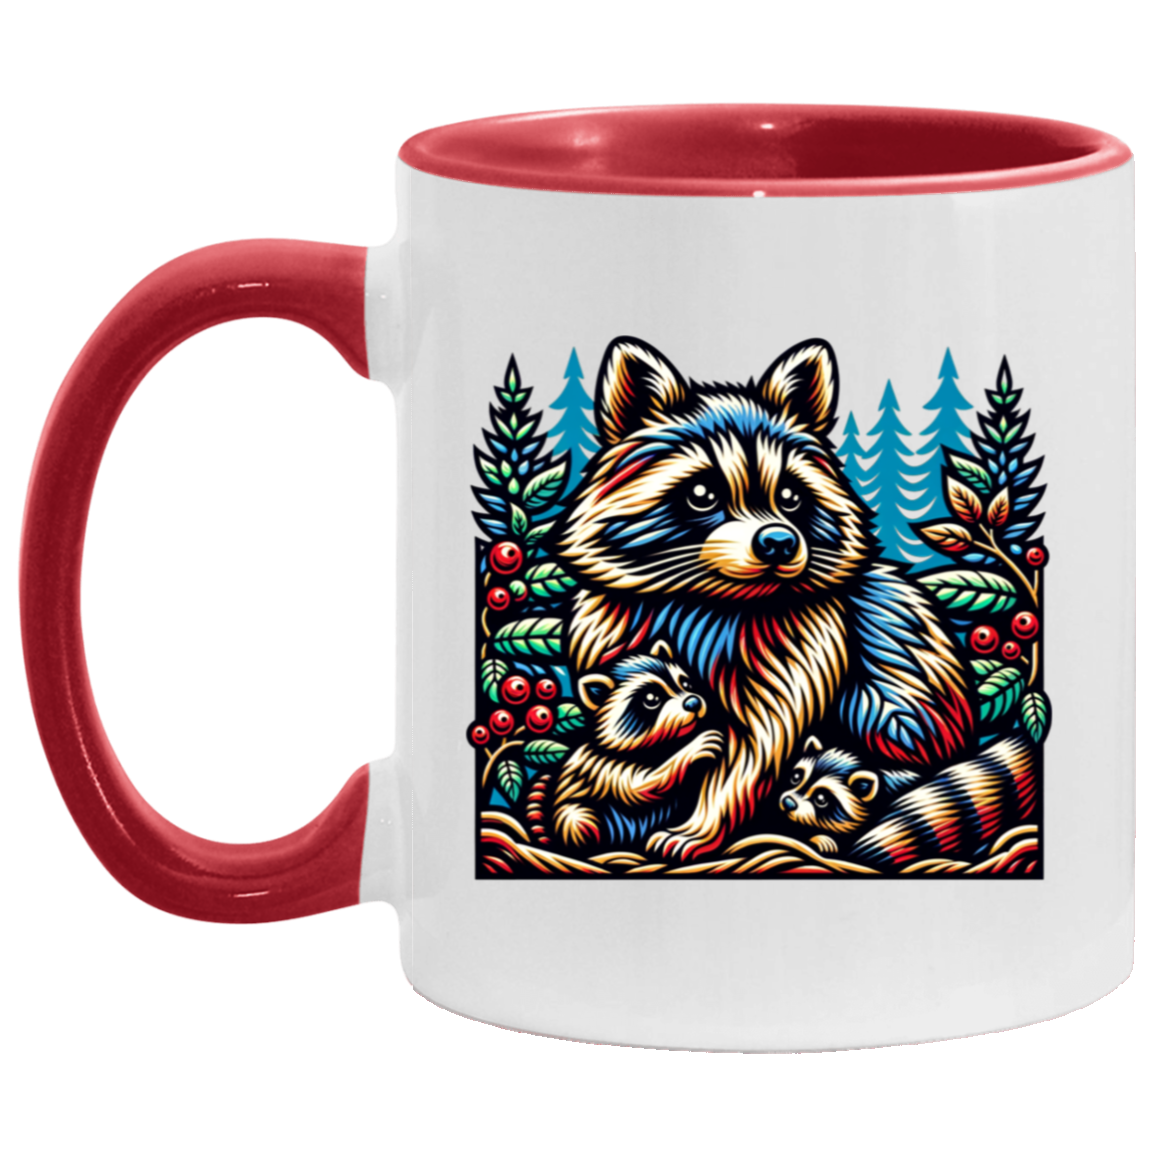 Woodcut Raccoon and Kits Mugs